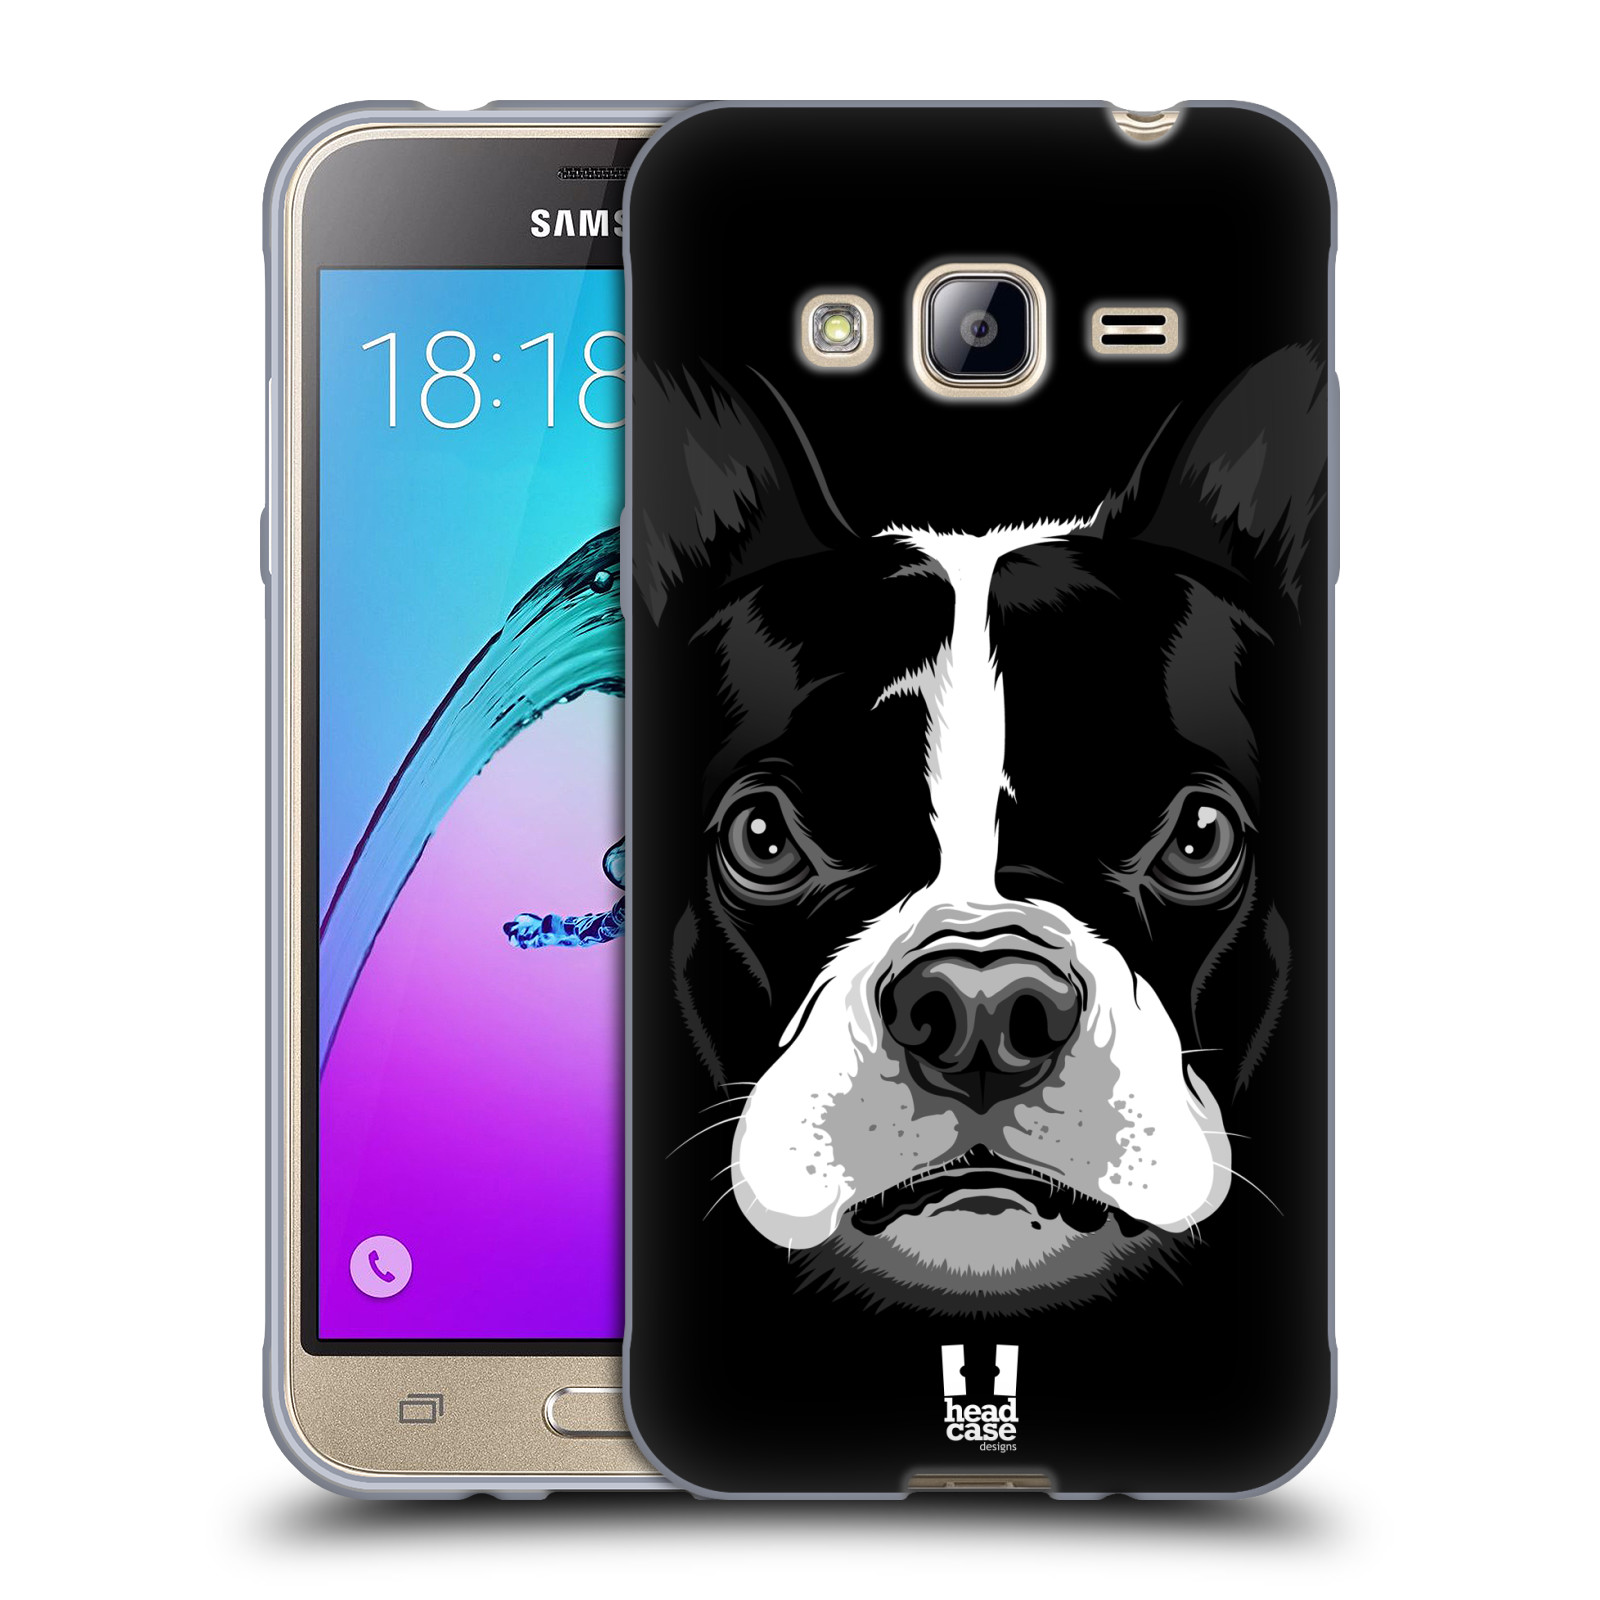 HEAD CASE silikonový obal na mobil Samsung Galaxy J3, J3 2016 vzor Zvíře kreslená tvář 2 buldok